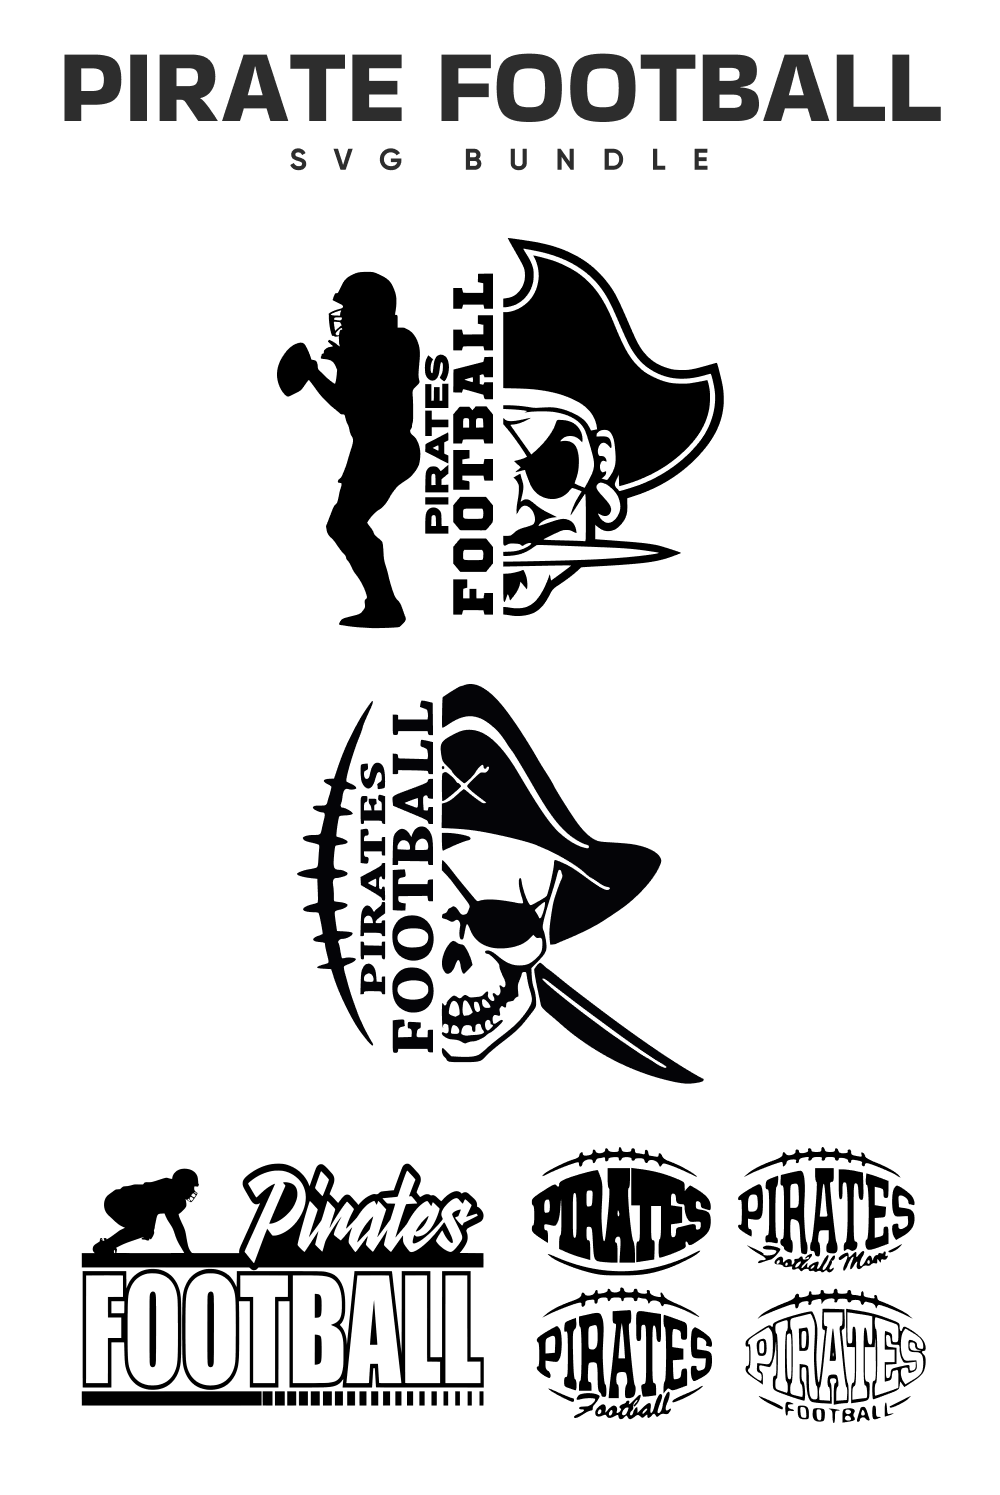 Pirate football svg bundle of pinterest.